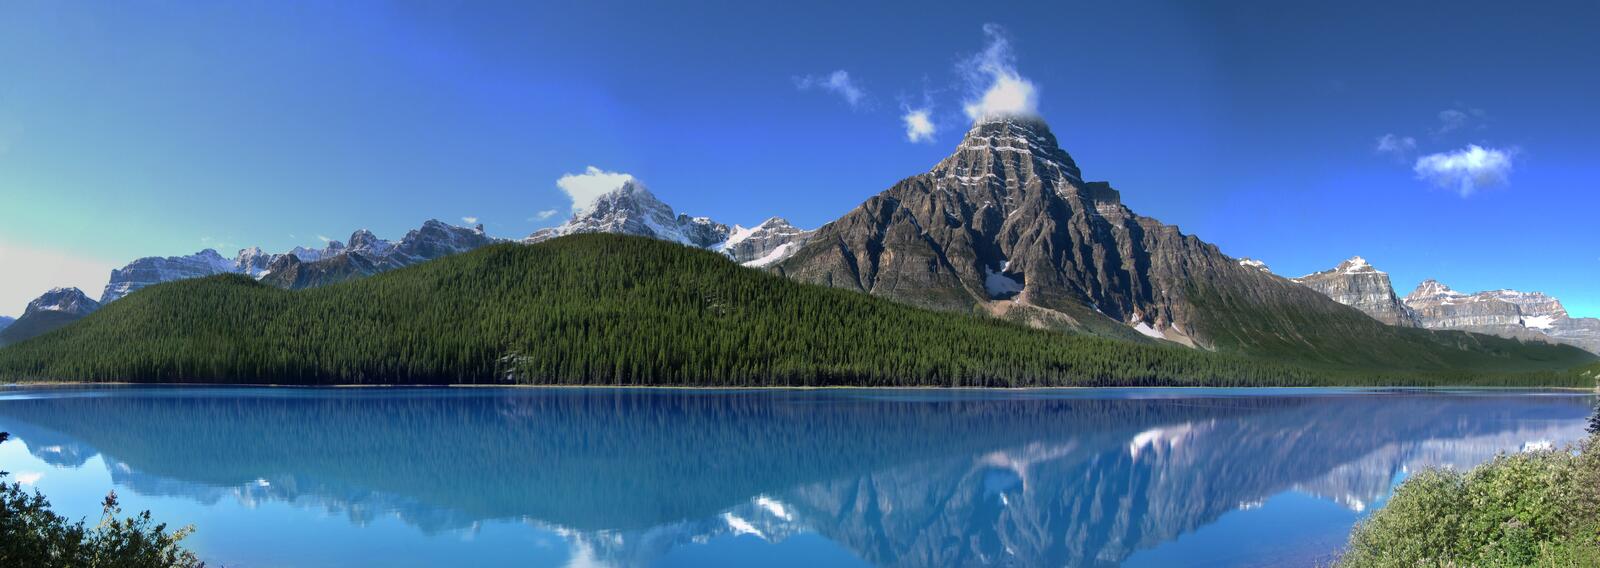 Wallpapers mountains lake mountain range on the desktop